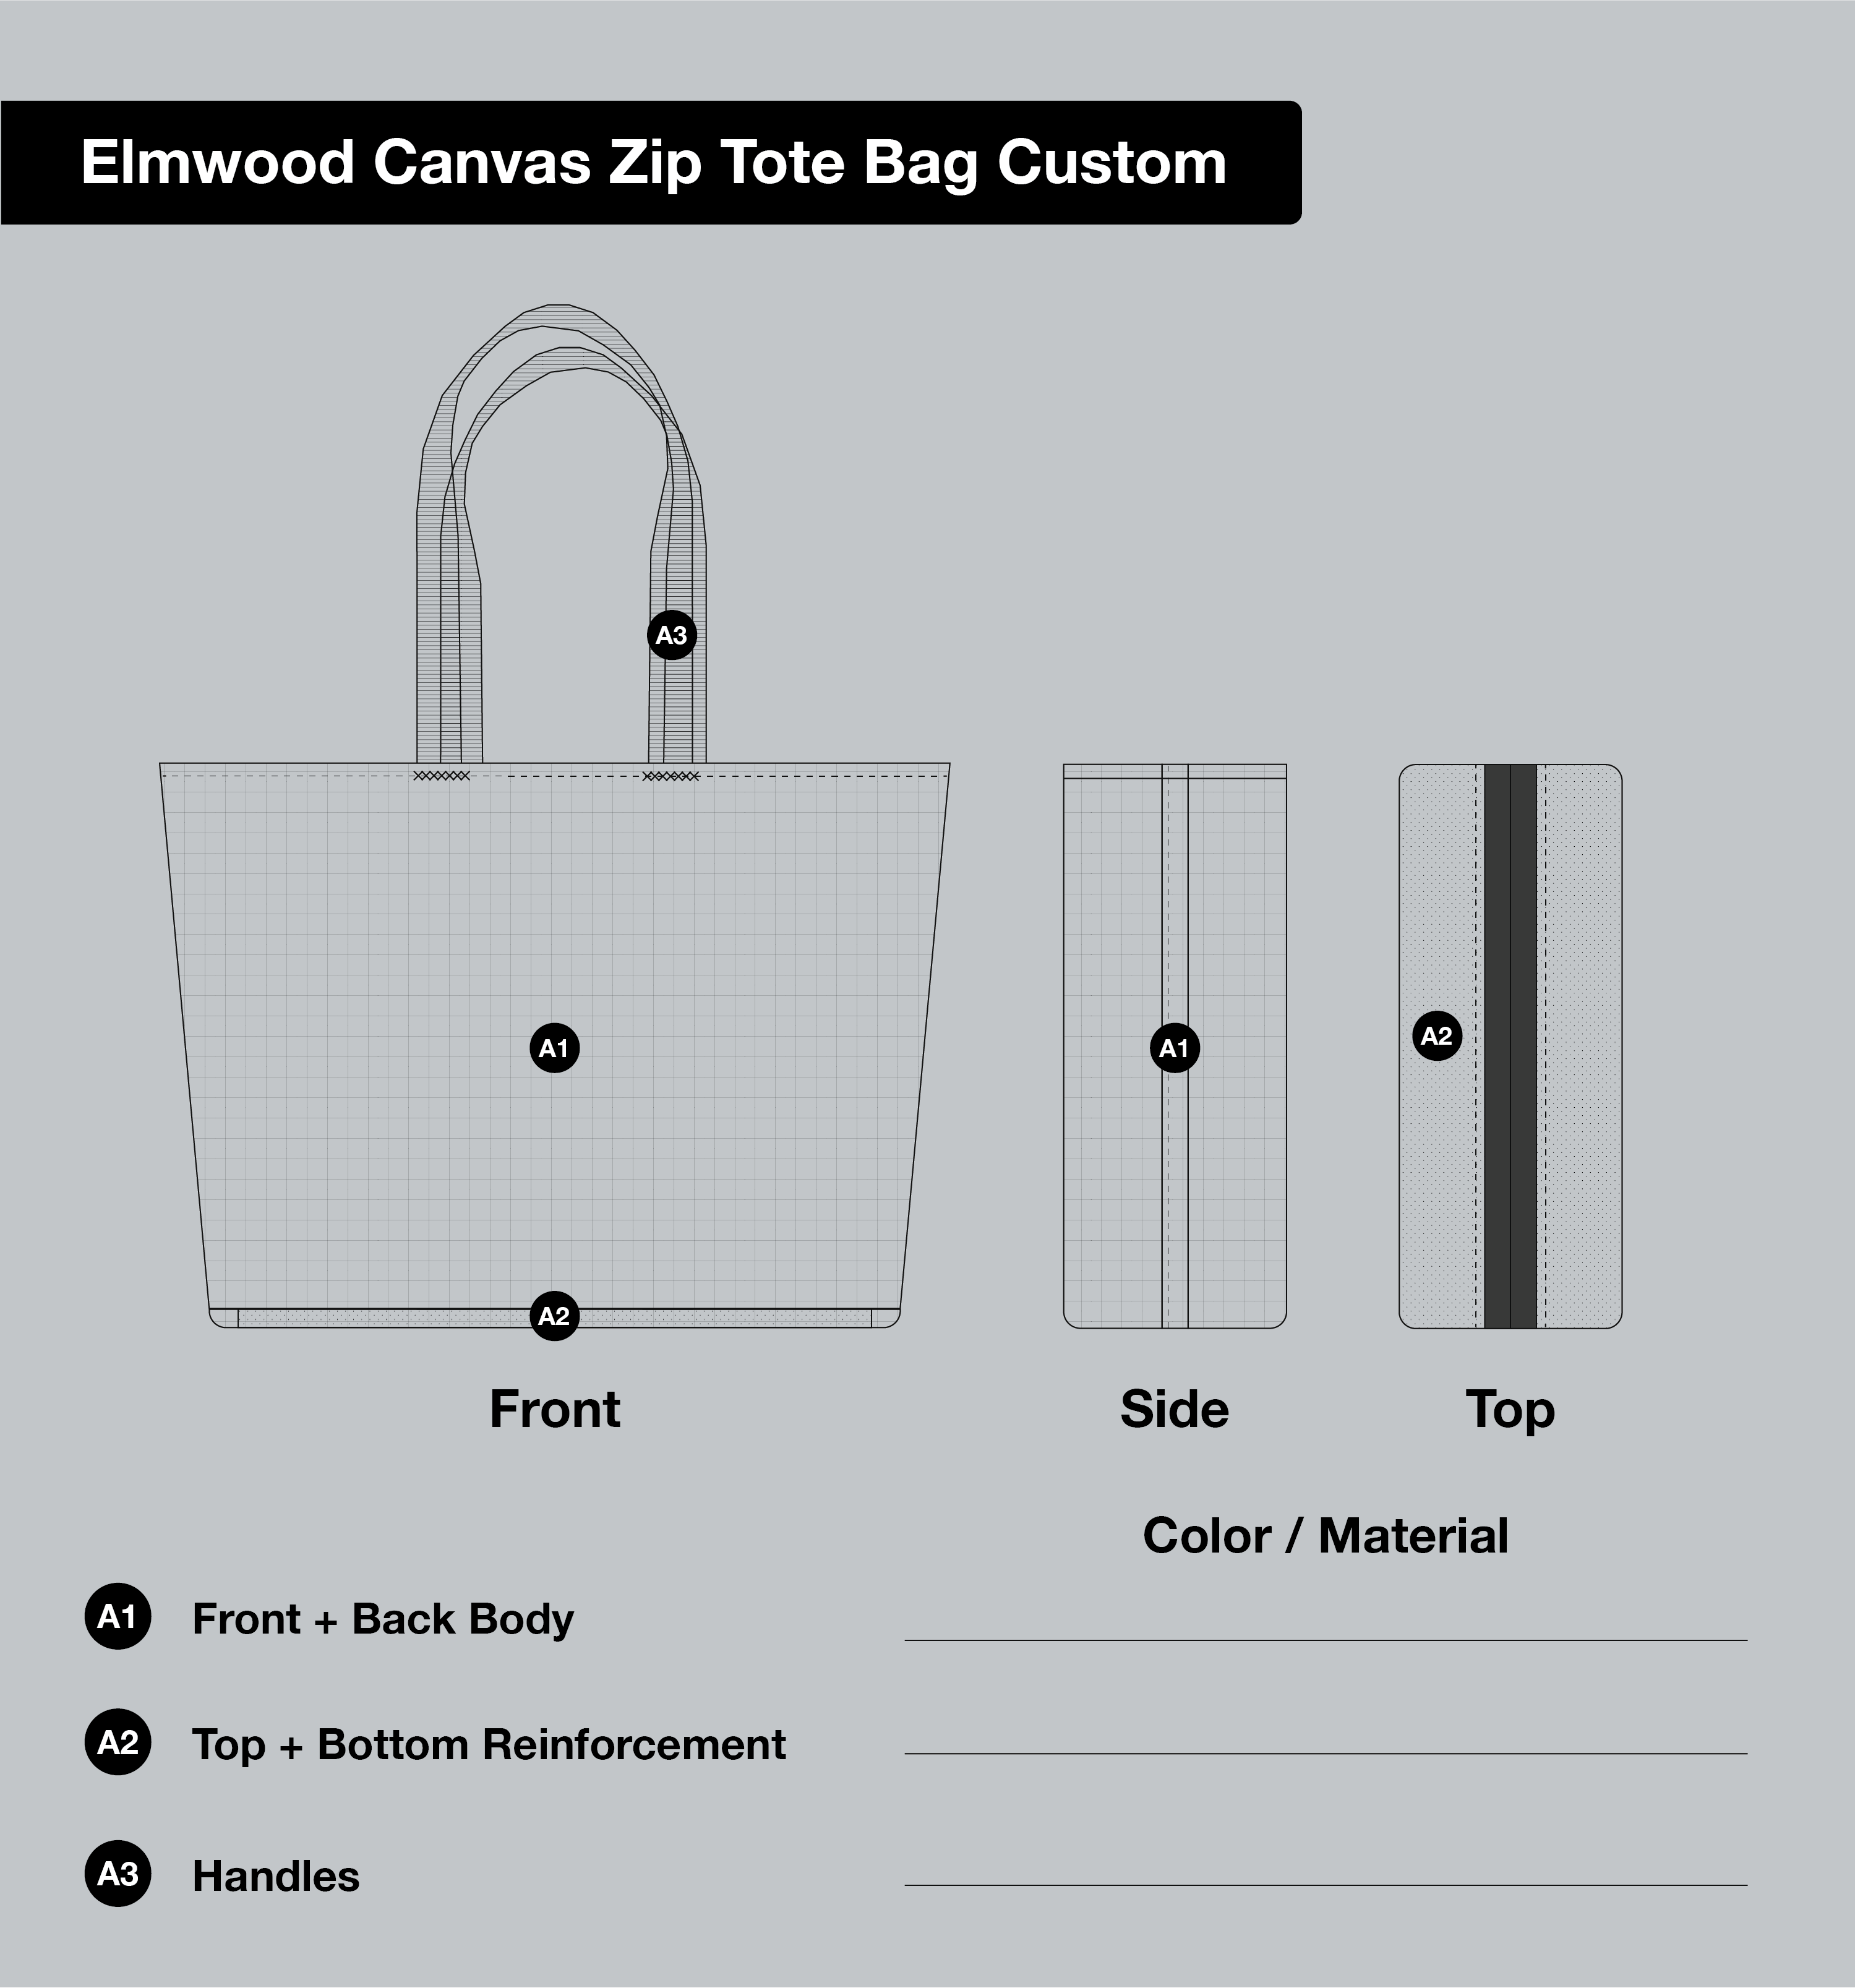 Elmwood Canvas Zip Tote Bag Custom